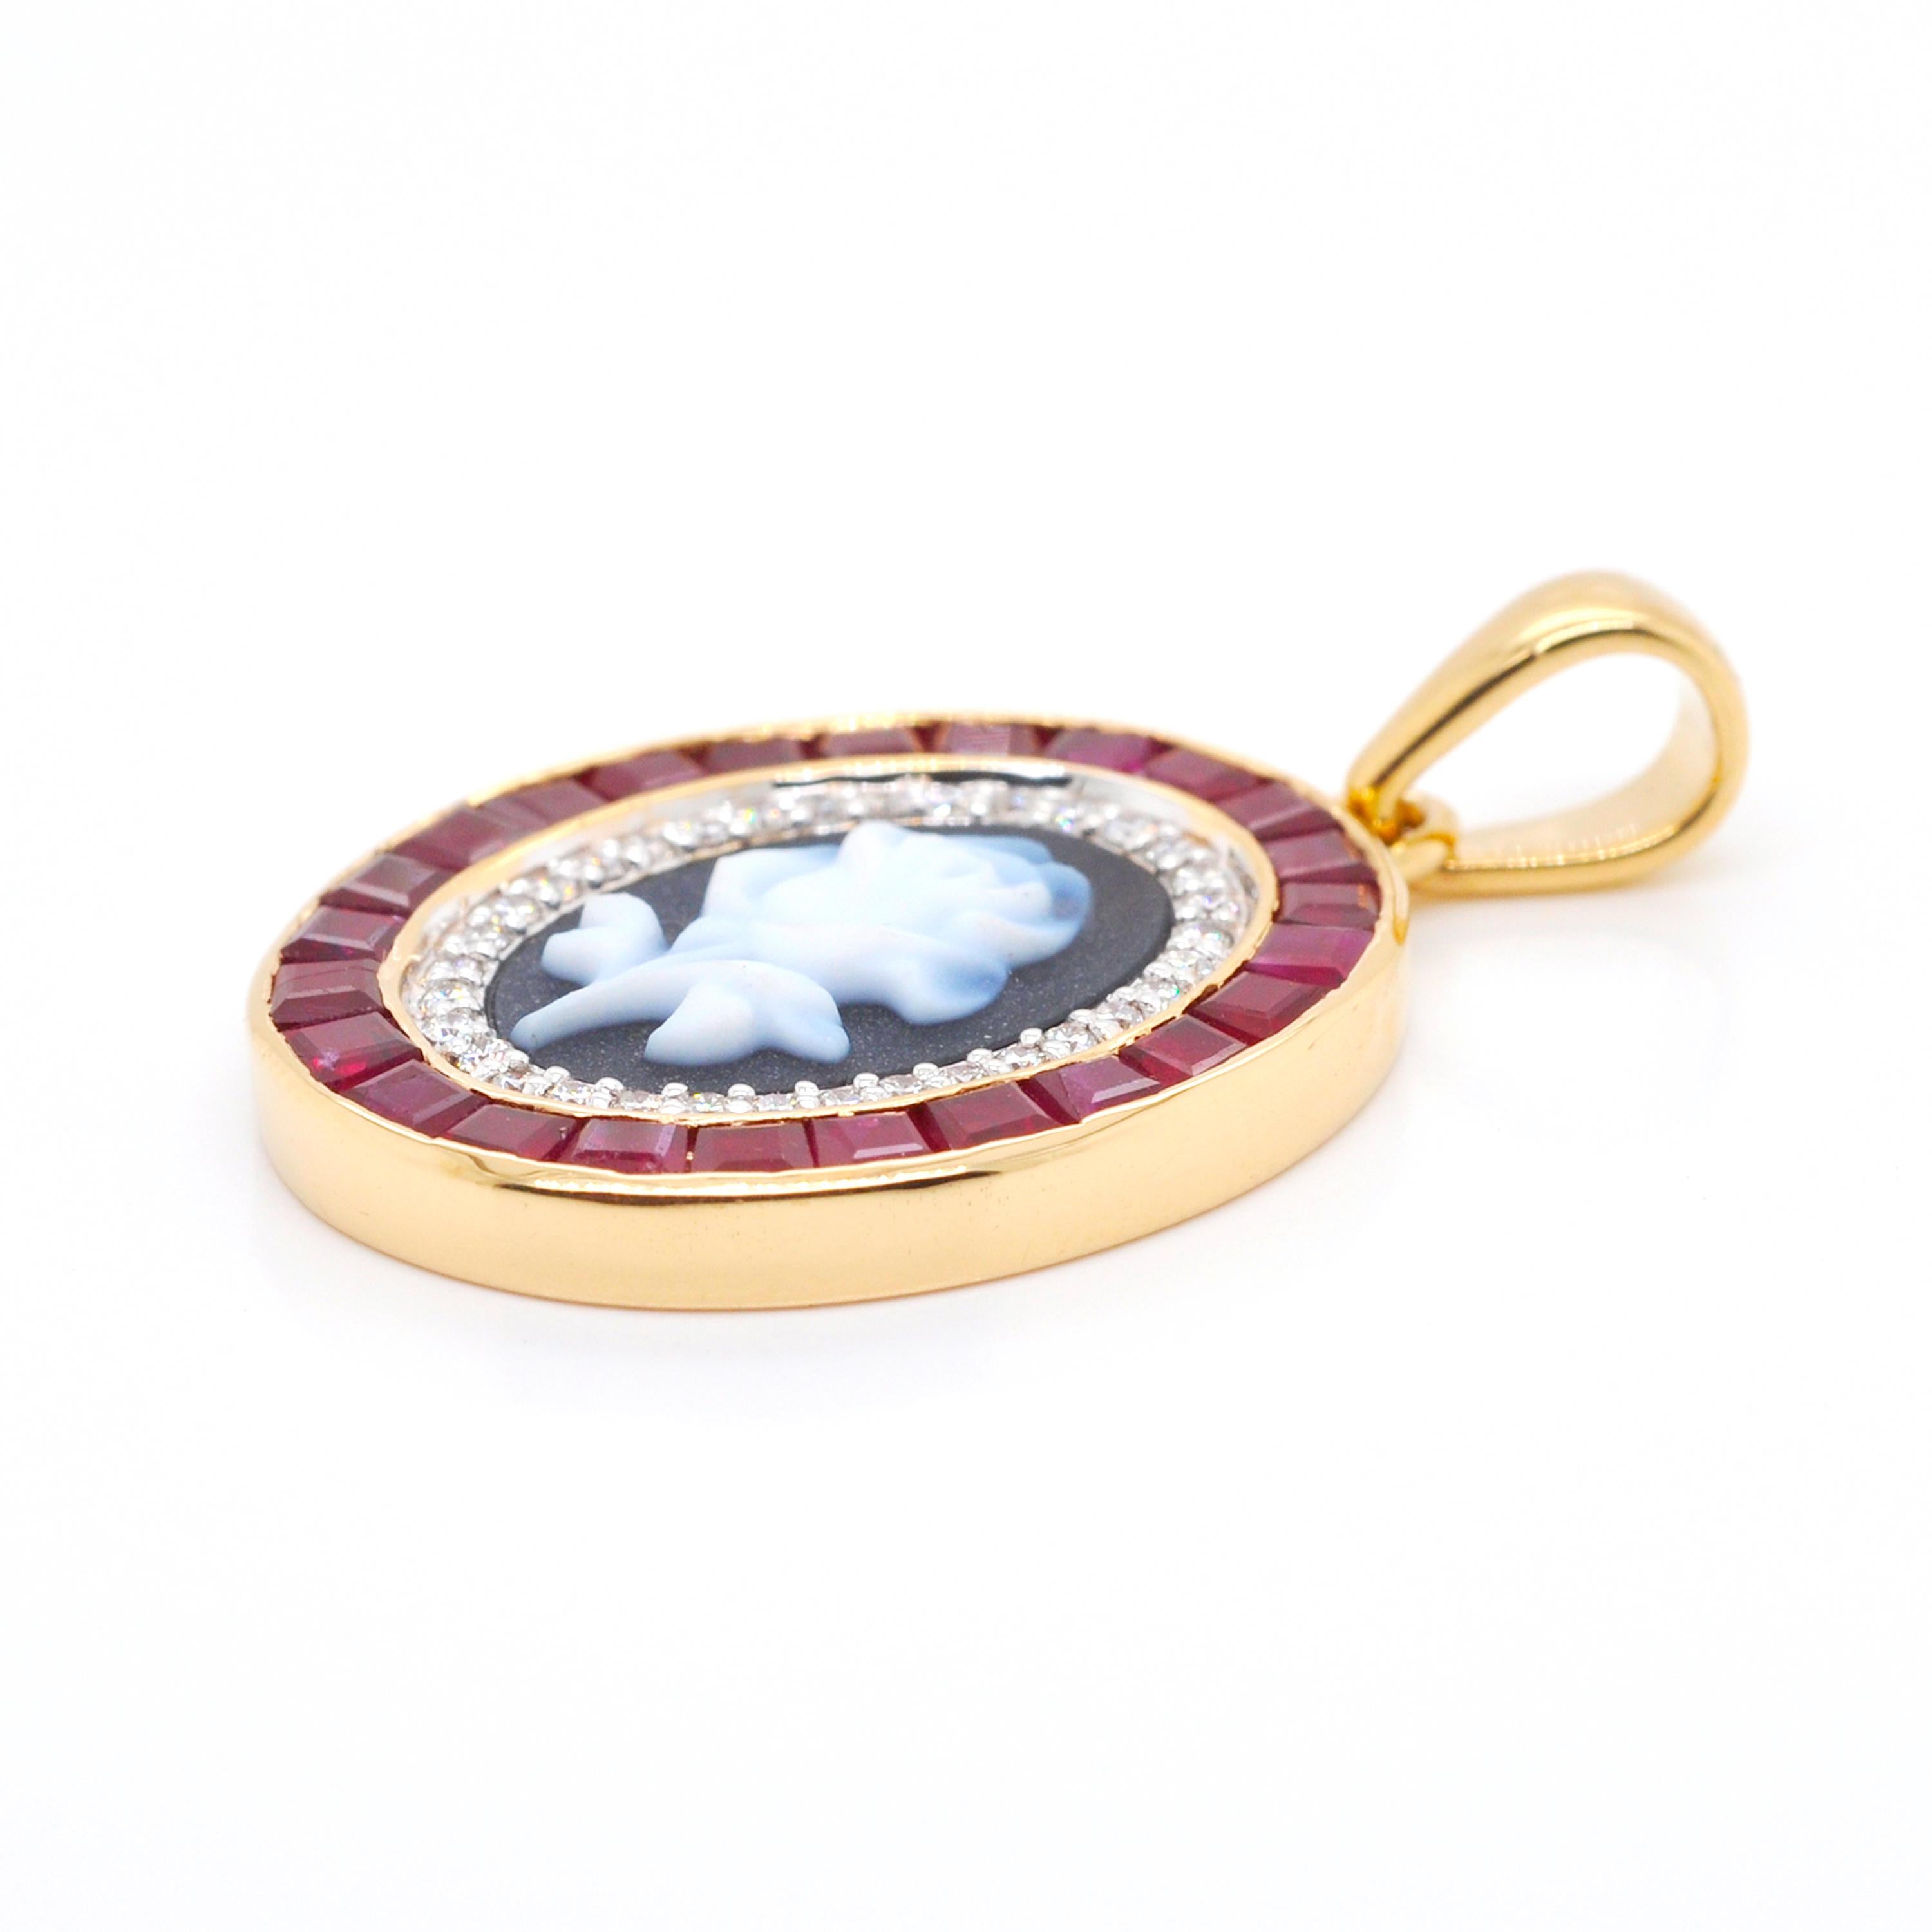 Tapered Baguette 18 Karat Gold Calibre Cut Burma Ruby Diamond Rose Agate Cameo Pendant Necklace